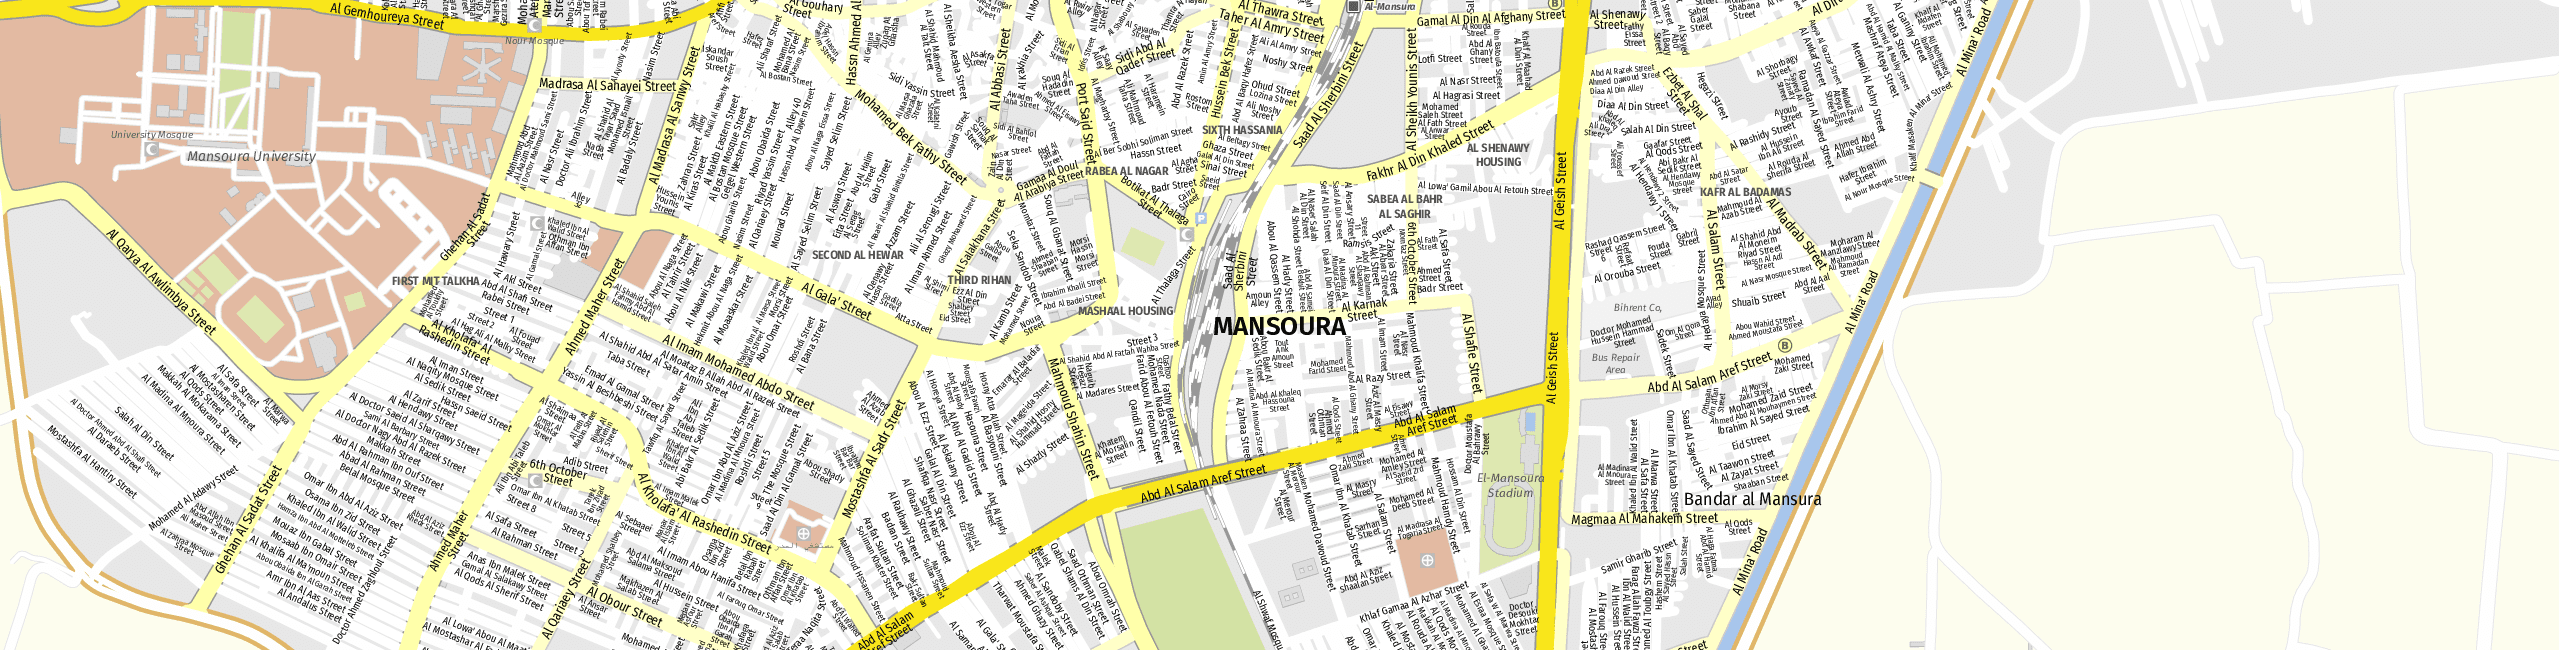 Stadtplan Mansoura zum Downloaden.